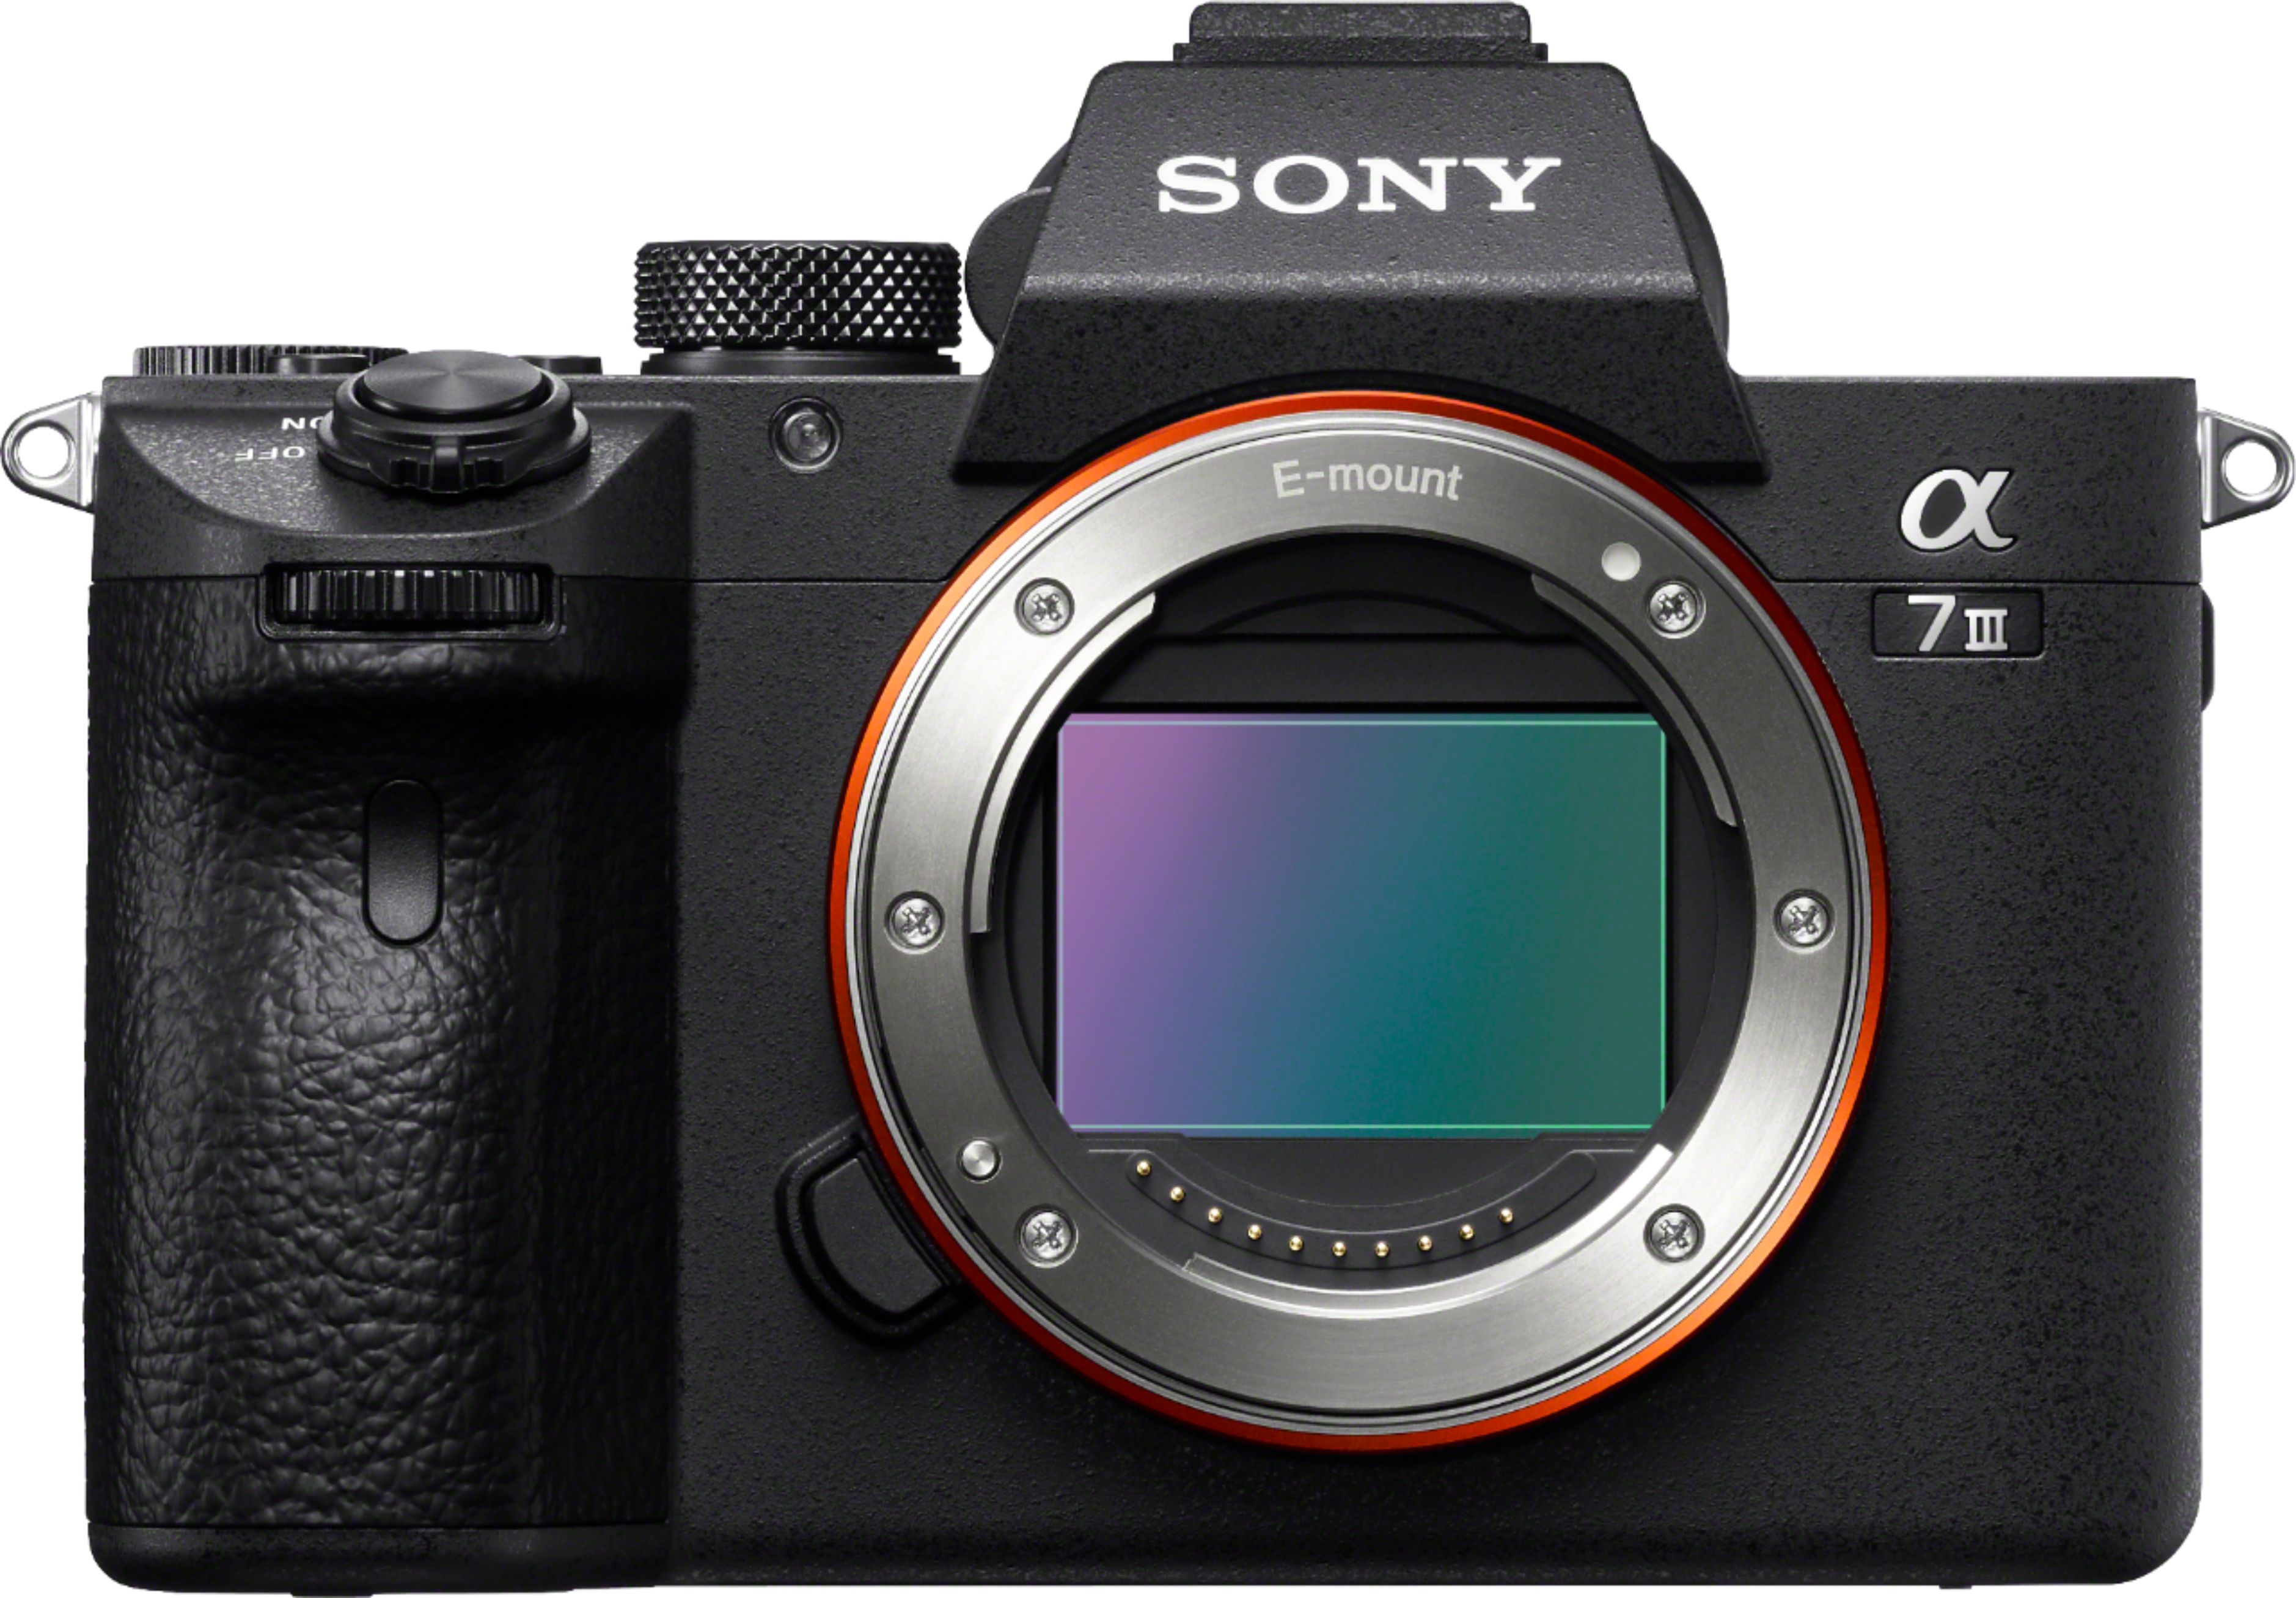 Is the Original Sony a7 Still a Good Camera?